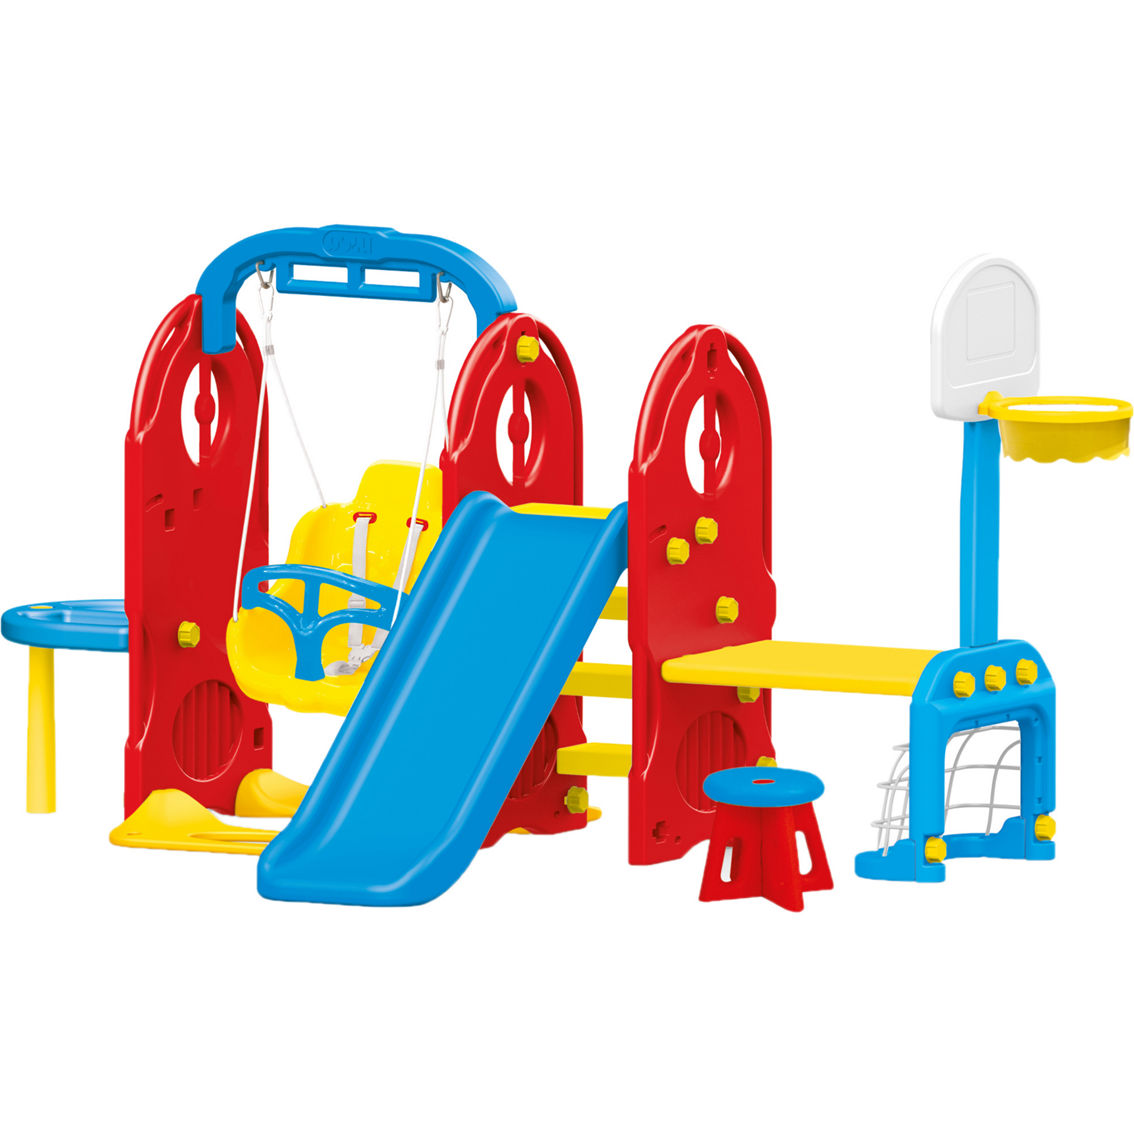 Dolu Toys 7-In-1 Backyard Playground - Image 2 of 5